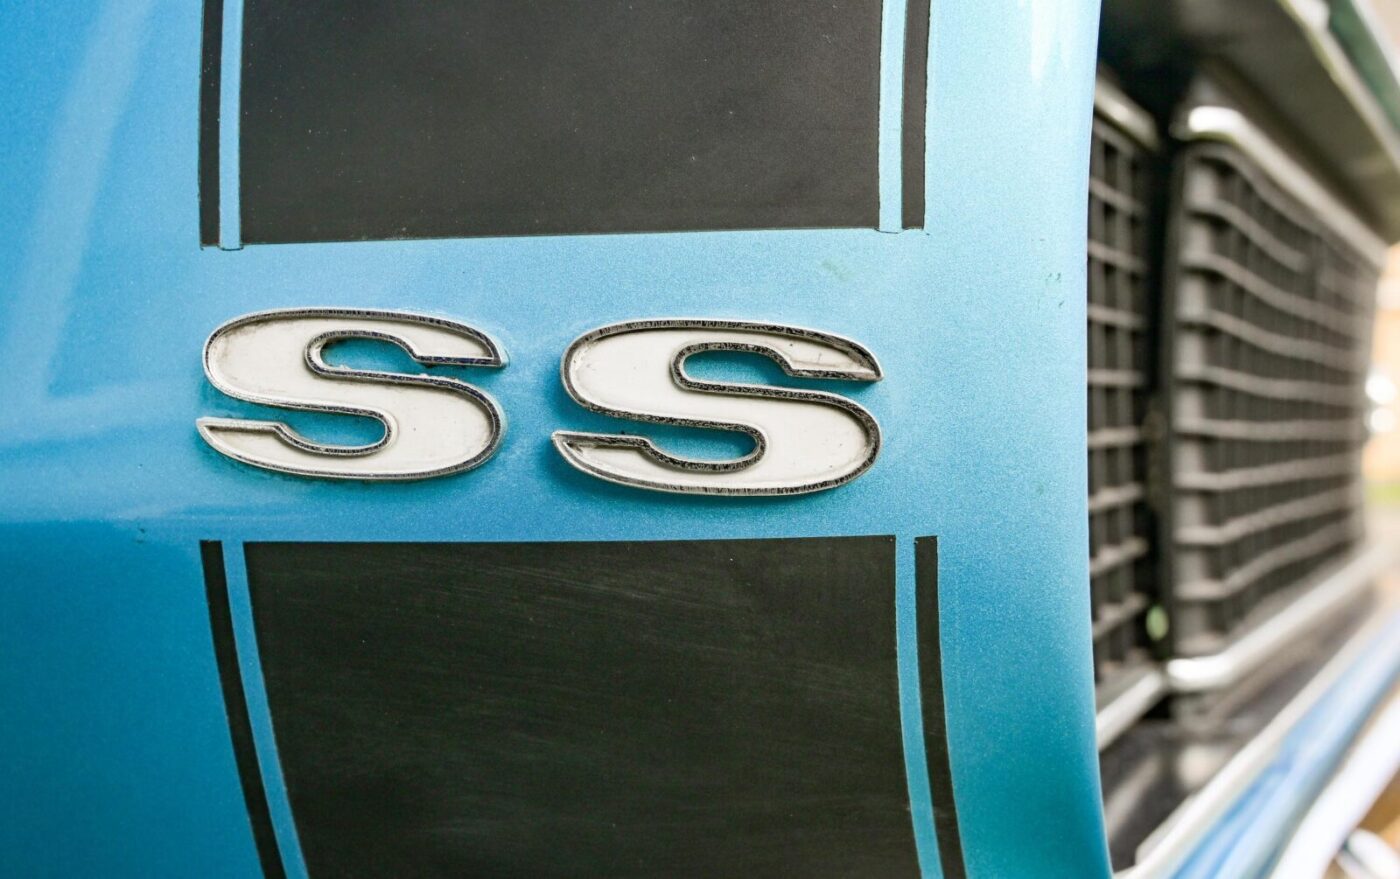 Camaro SS badge